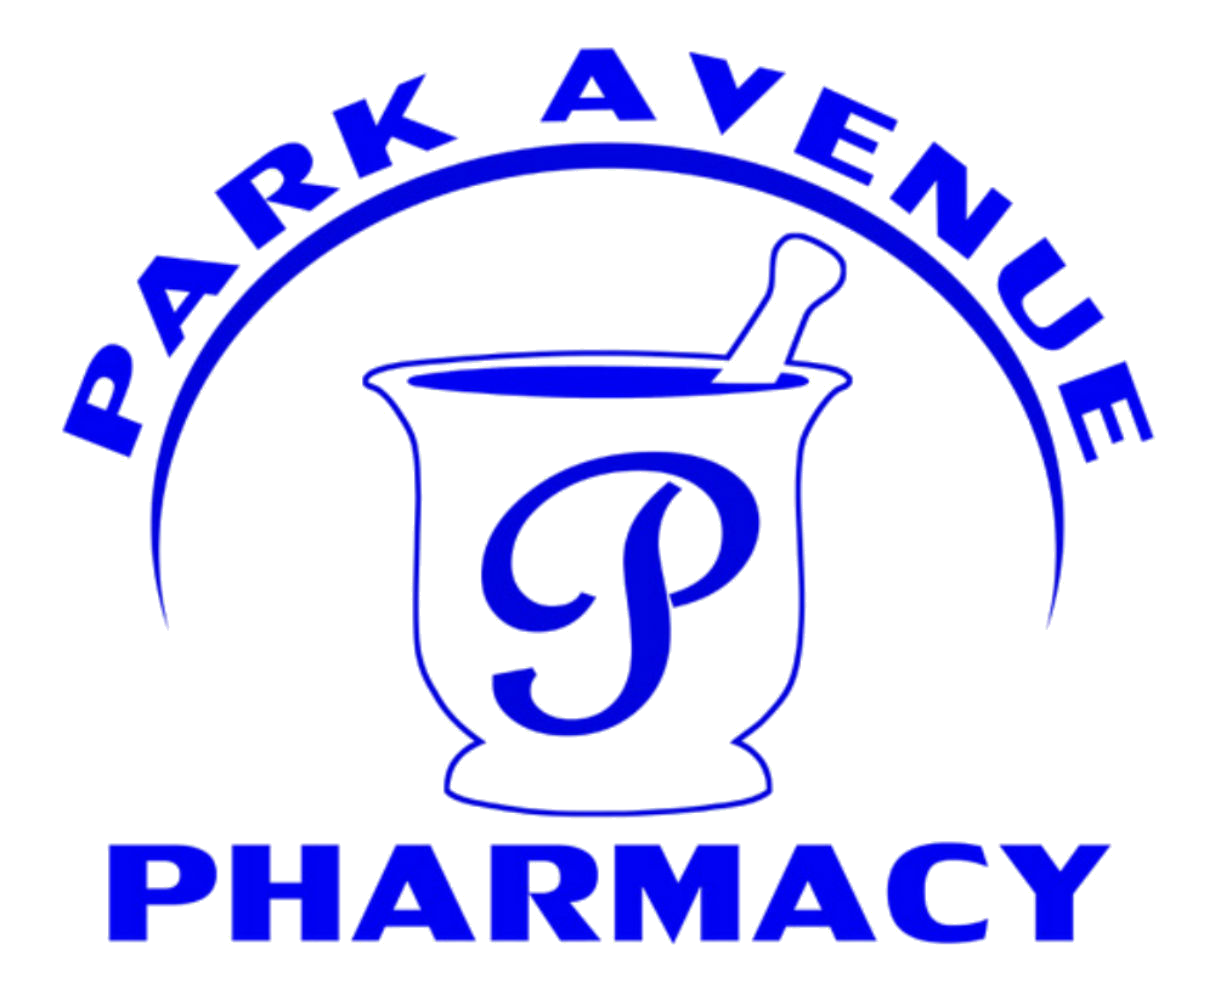 Pain clipart gastroenterology. Park avenue pharmacy